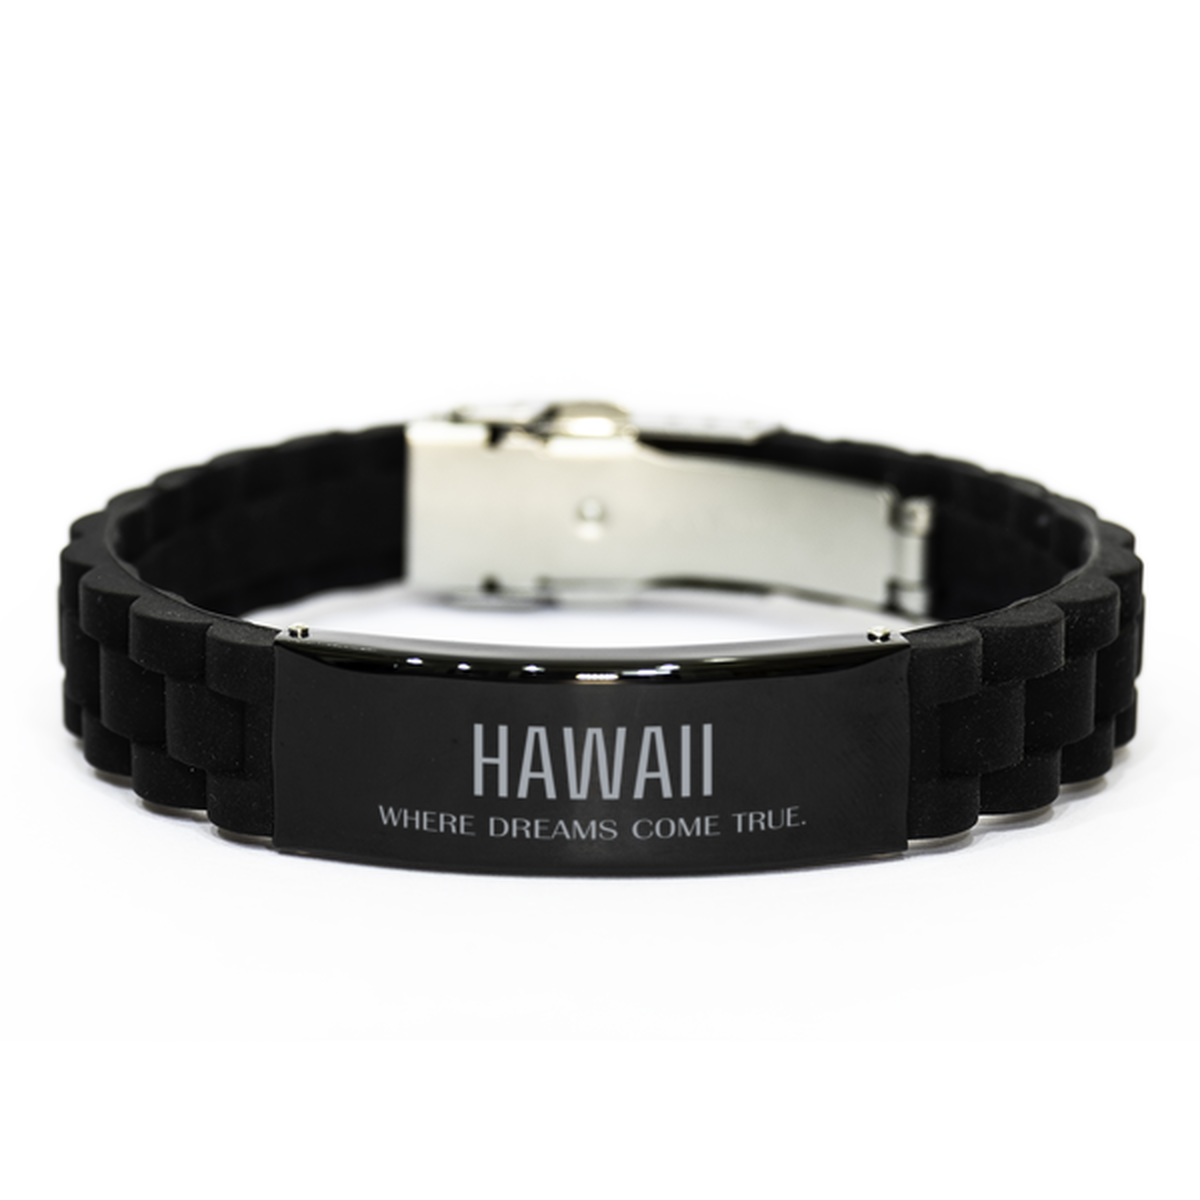 Love Hawaii State Black Glidelock Clasp Bracelet, Hawaii Where dreams come true, Birthday Inspirational Gifts For Hawaii Men, Women, Friends